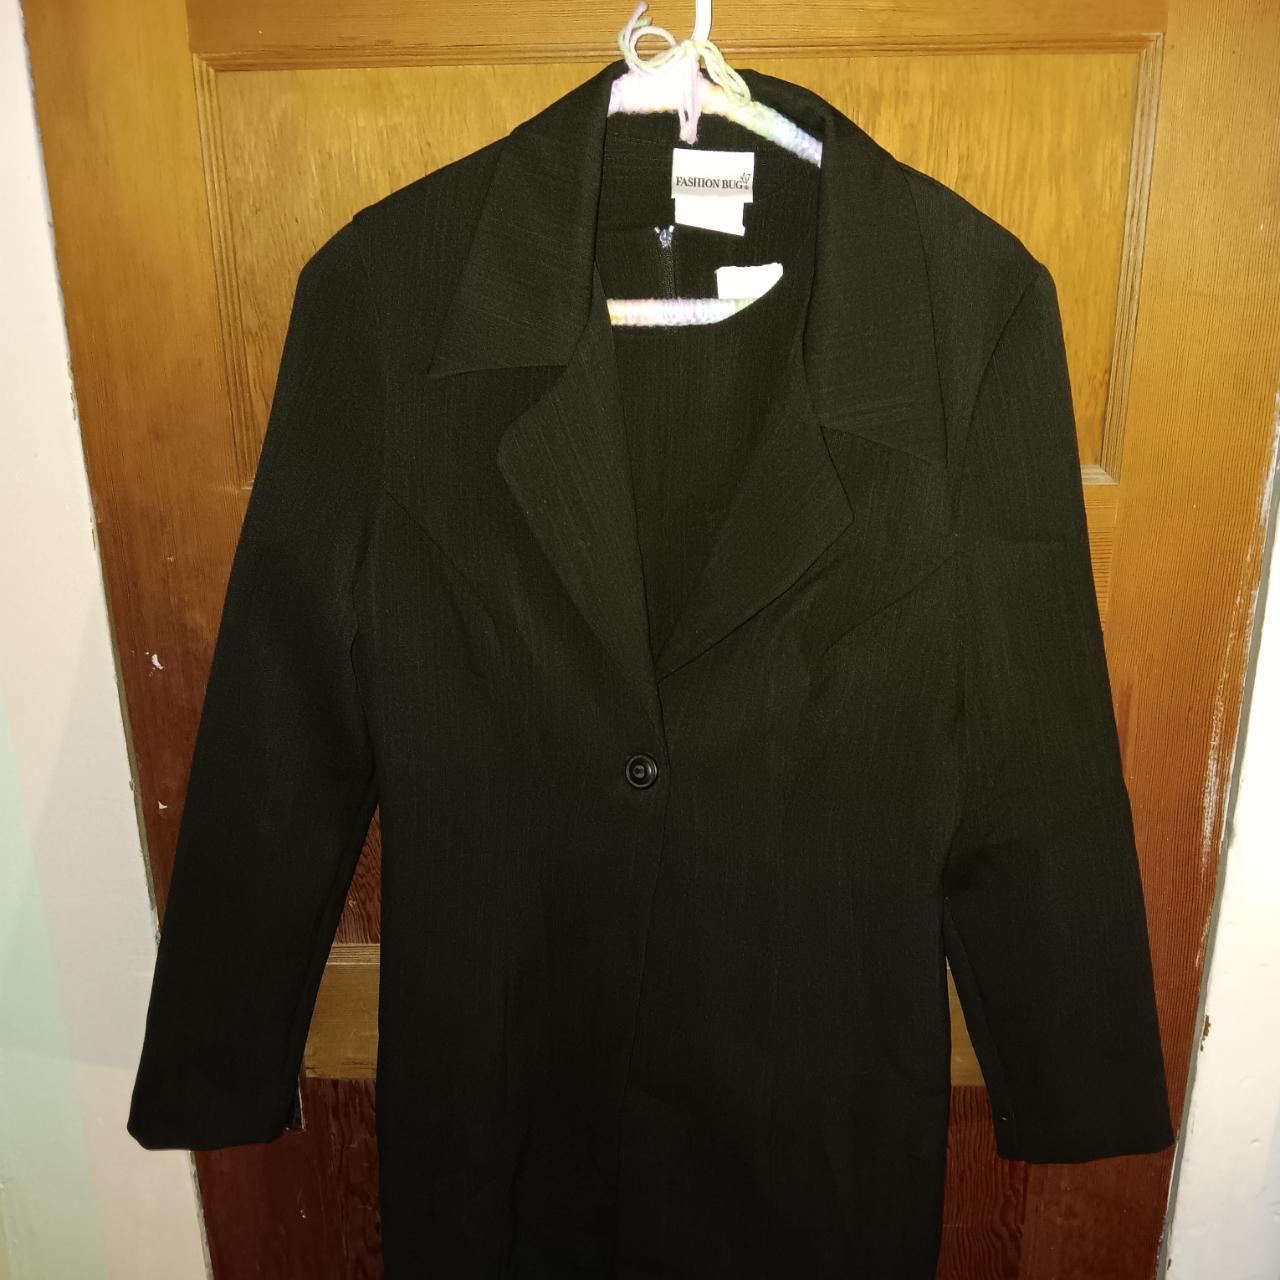 Vintage Fashion Bug dress and suit coat size 10. Not - Depop